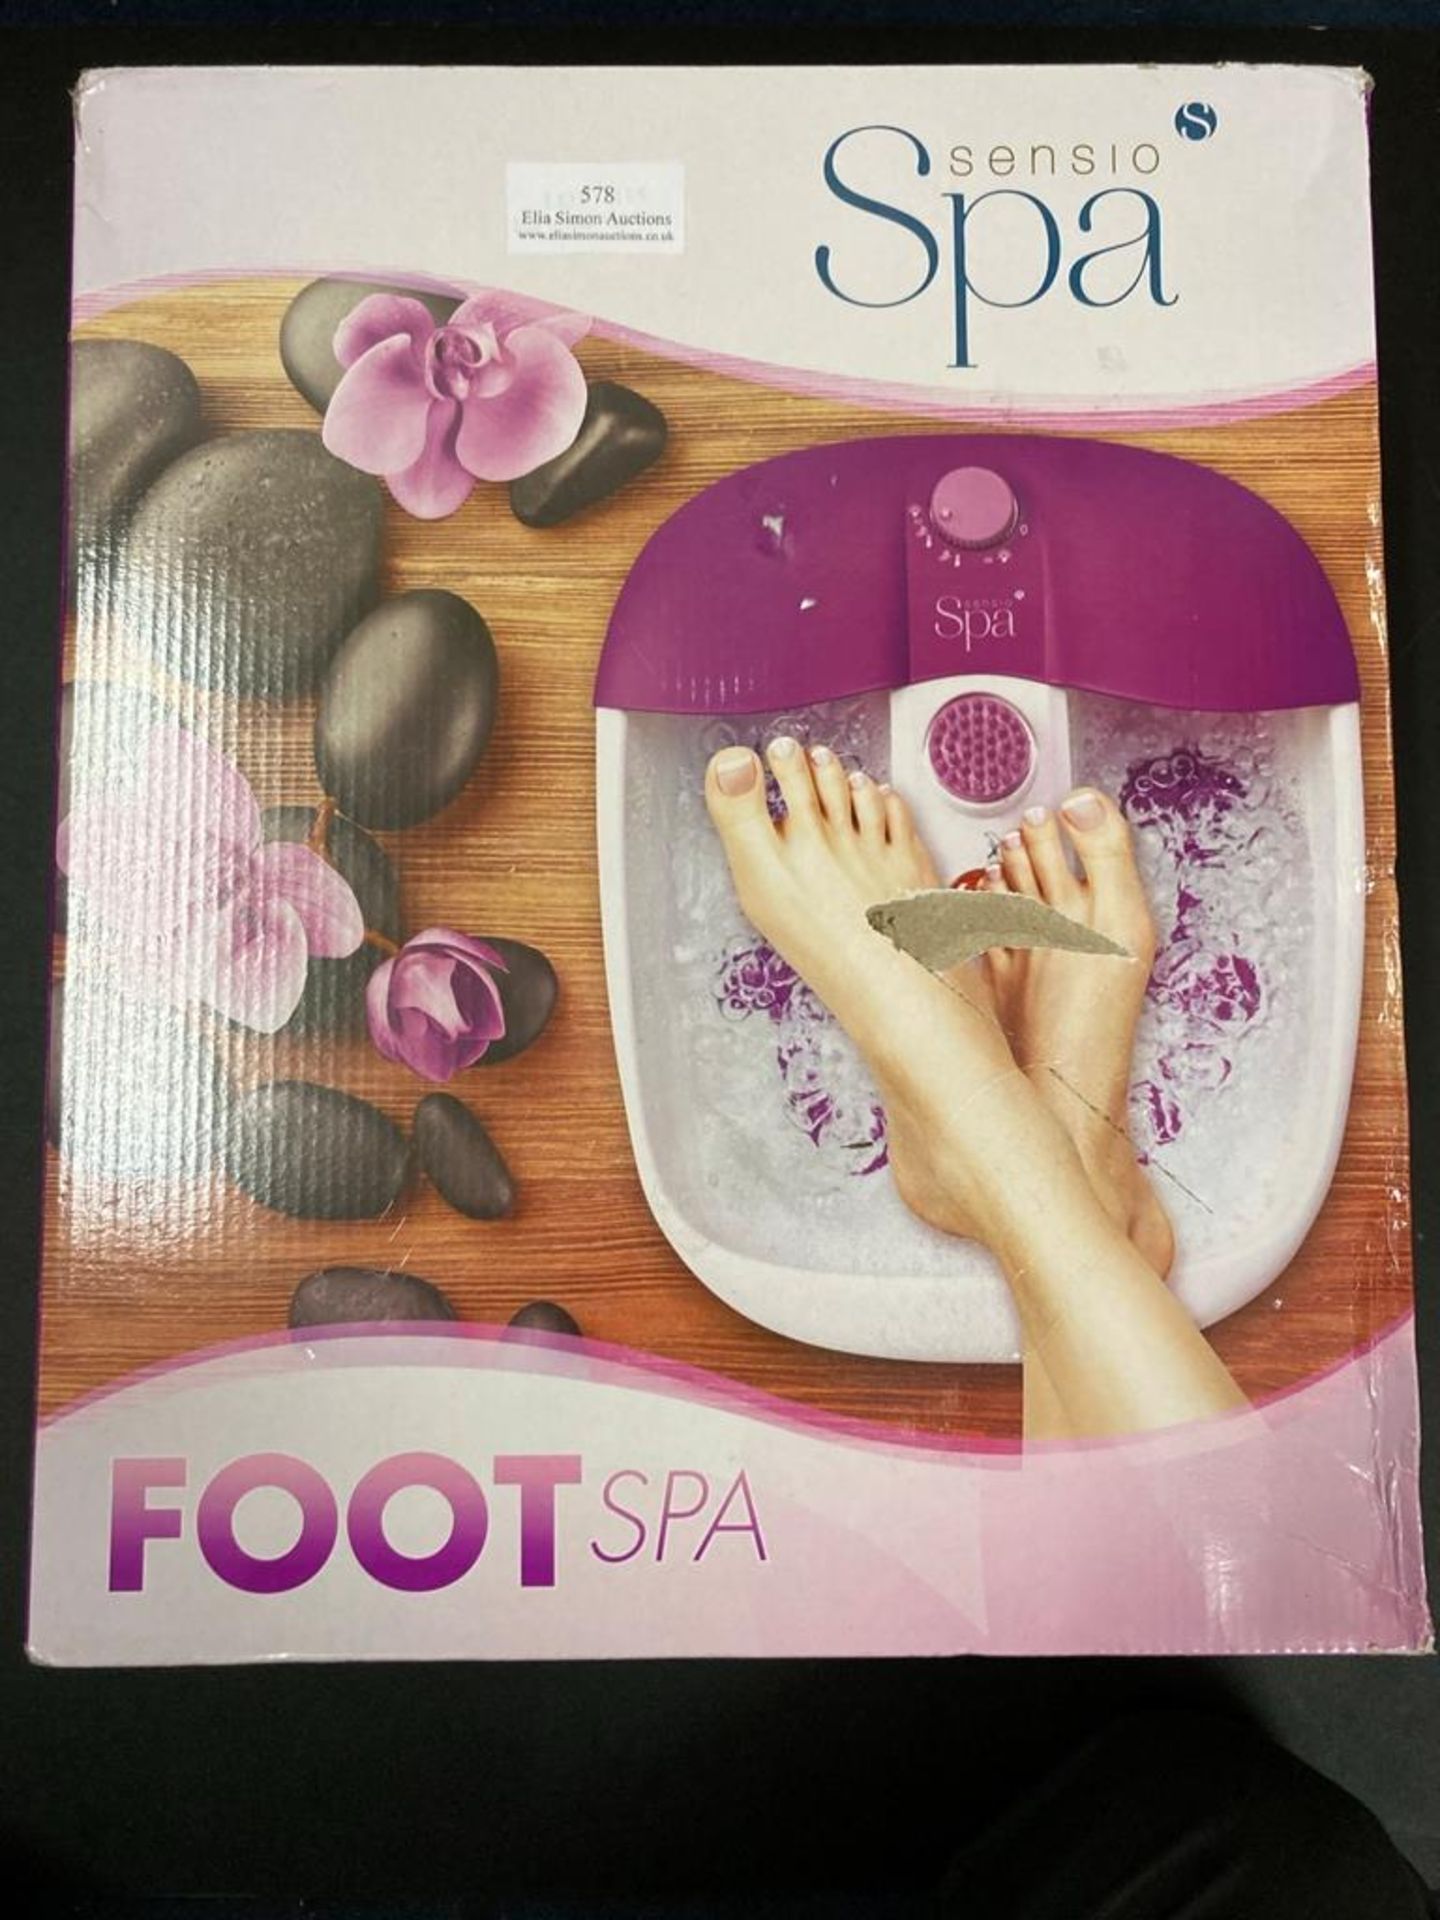 Sensio Foot Spa Massager Pedicure Bath Ã¢â‚¬â€œ Nine accessories - Pamper Your Feet with Heat, Bubbl